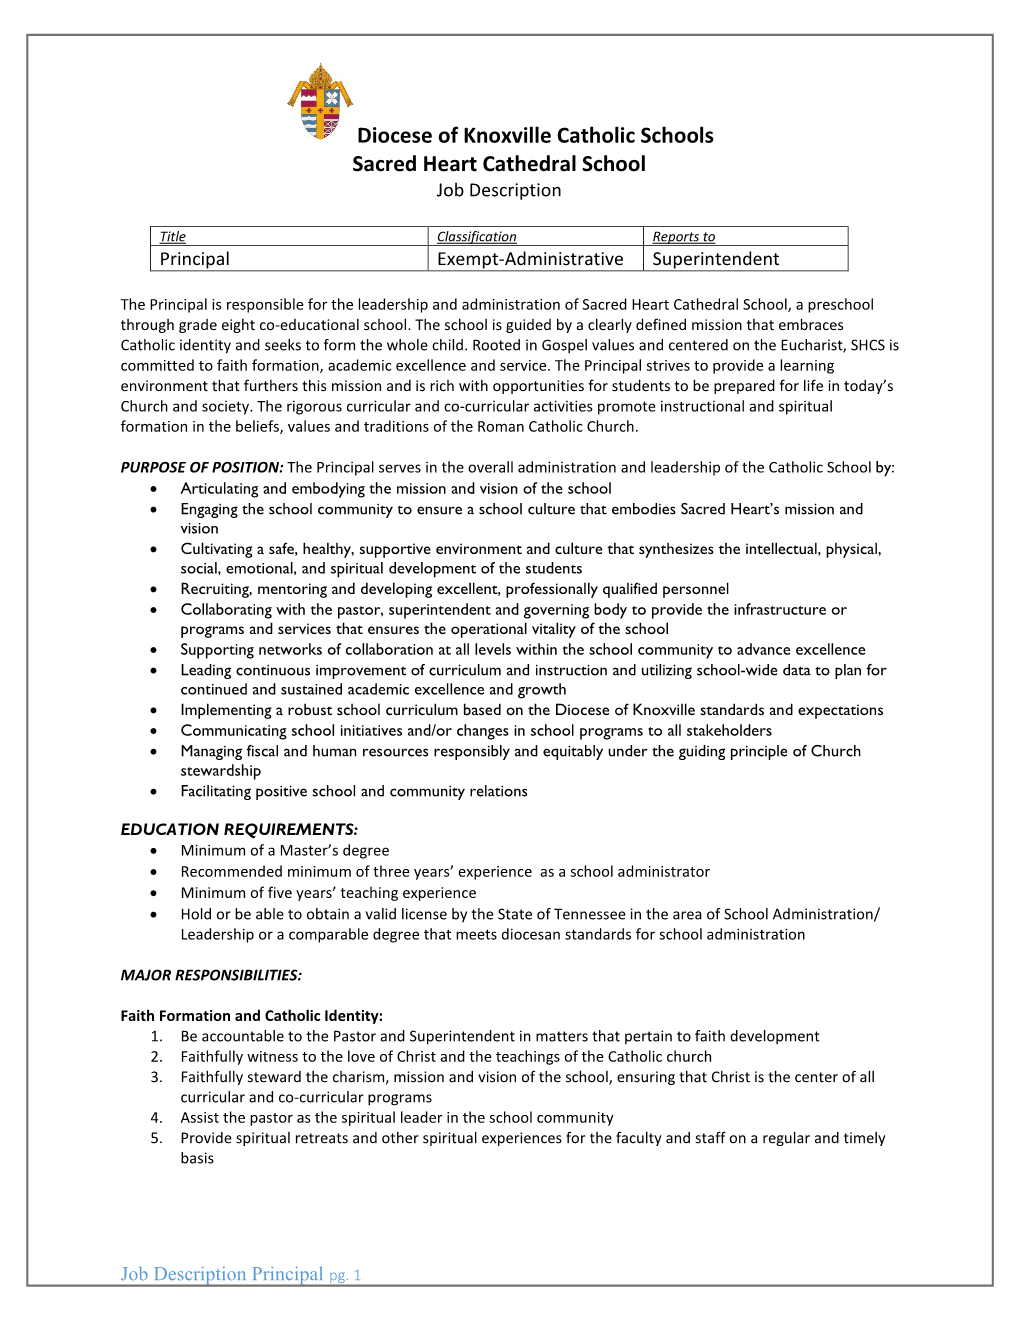 Sacred Heart Cathedral School Job Description